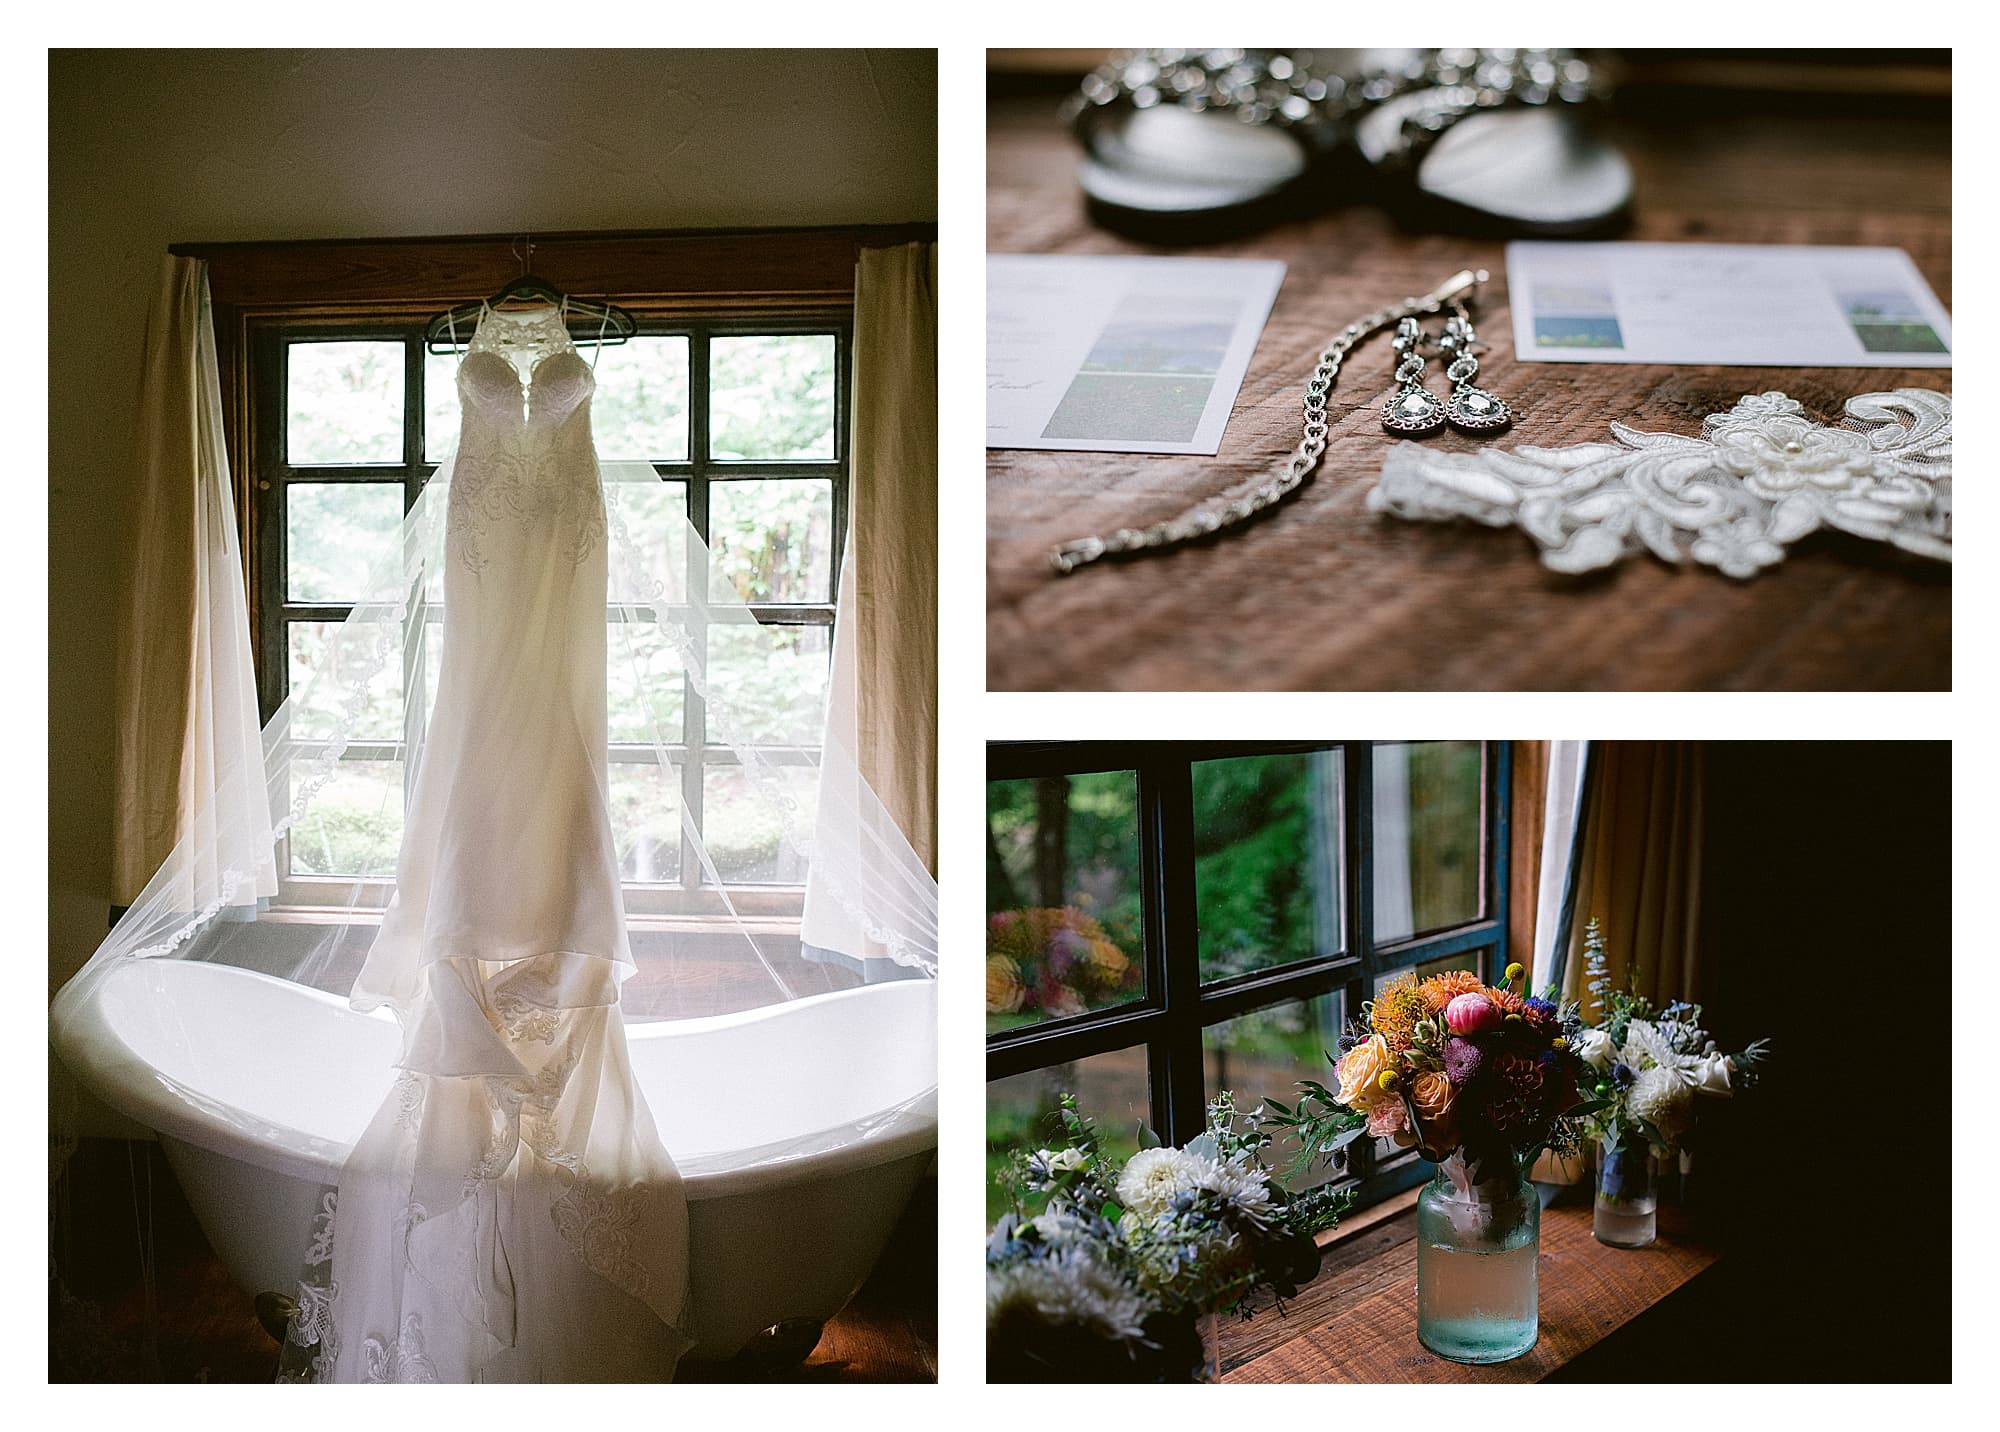 Lace wedding dress hanging in window awaiting bride